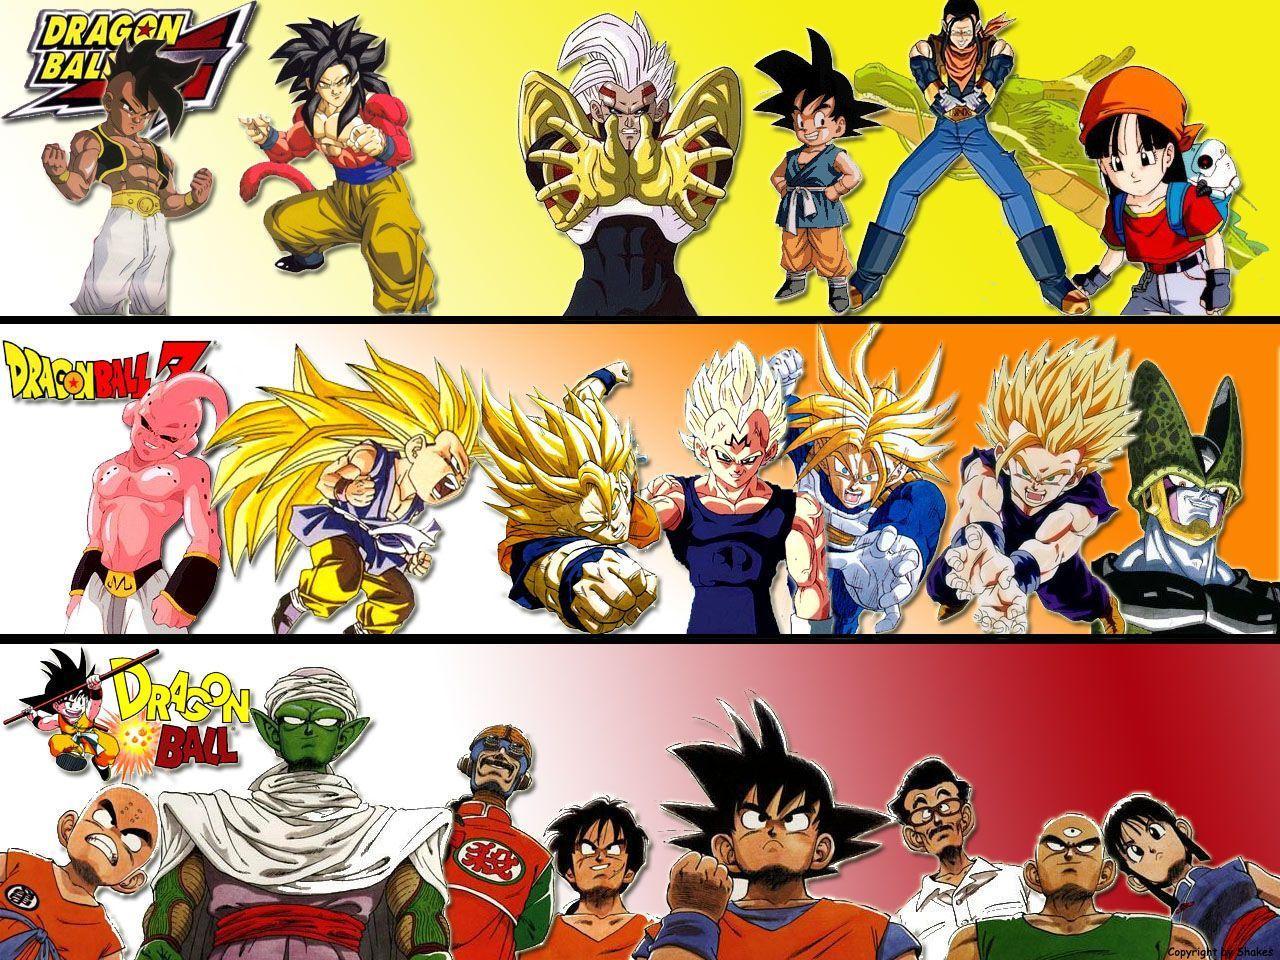 Download Dragon Ball GT Characters Wallpaper